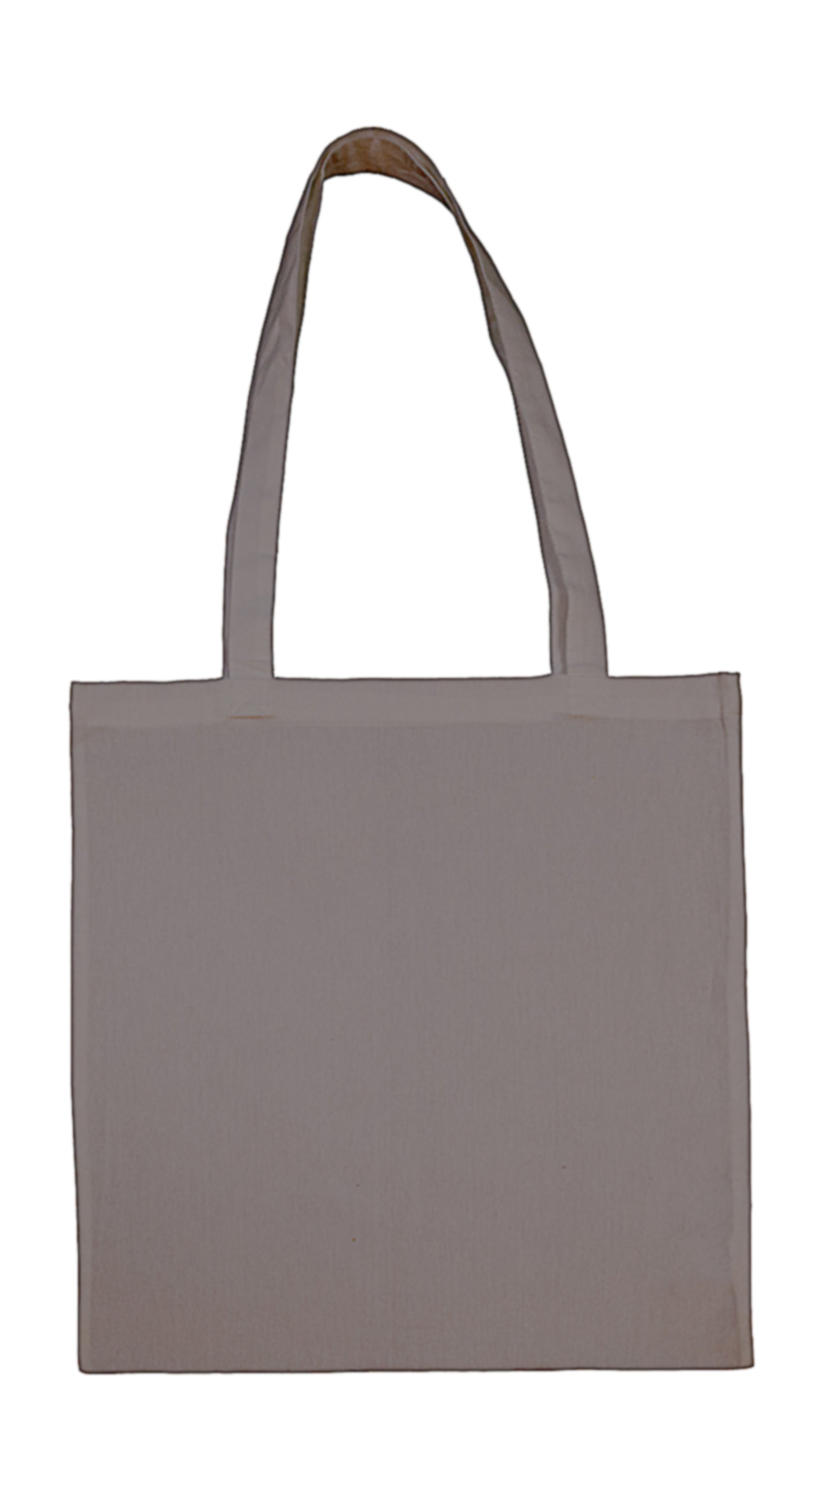  Cotton Bag LH in Farbe Dark Grey